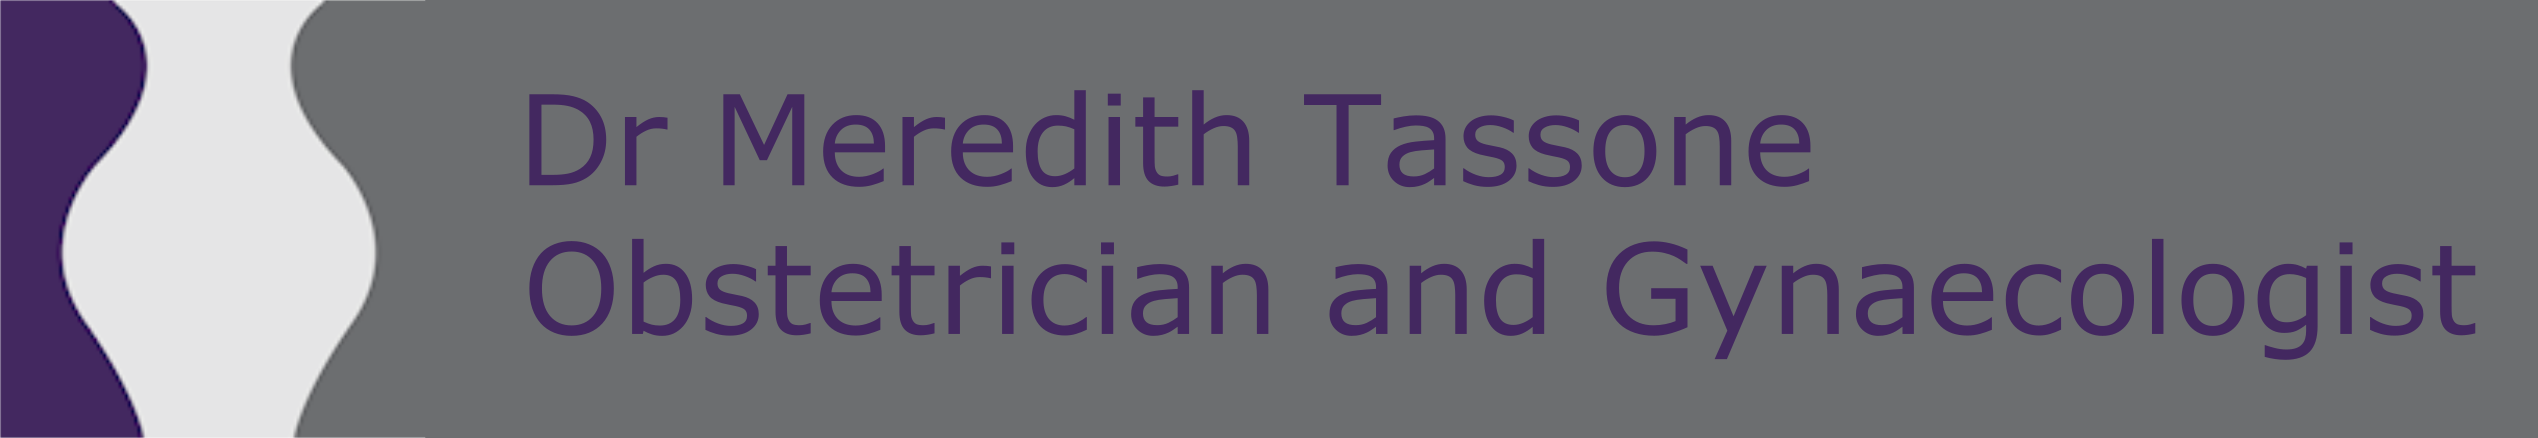 Dr Meredith Tassone - PICCSI Logo